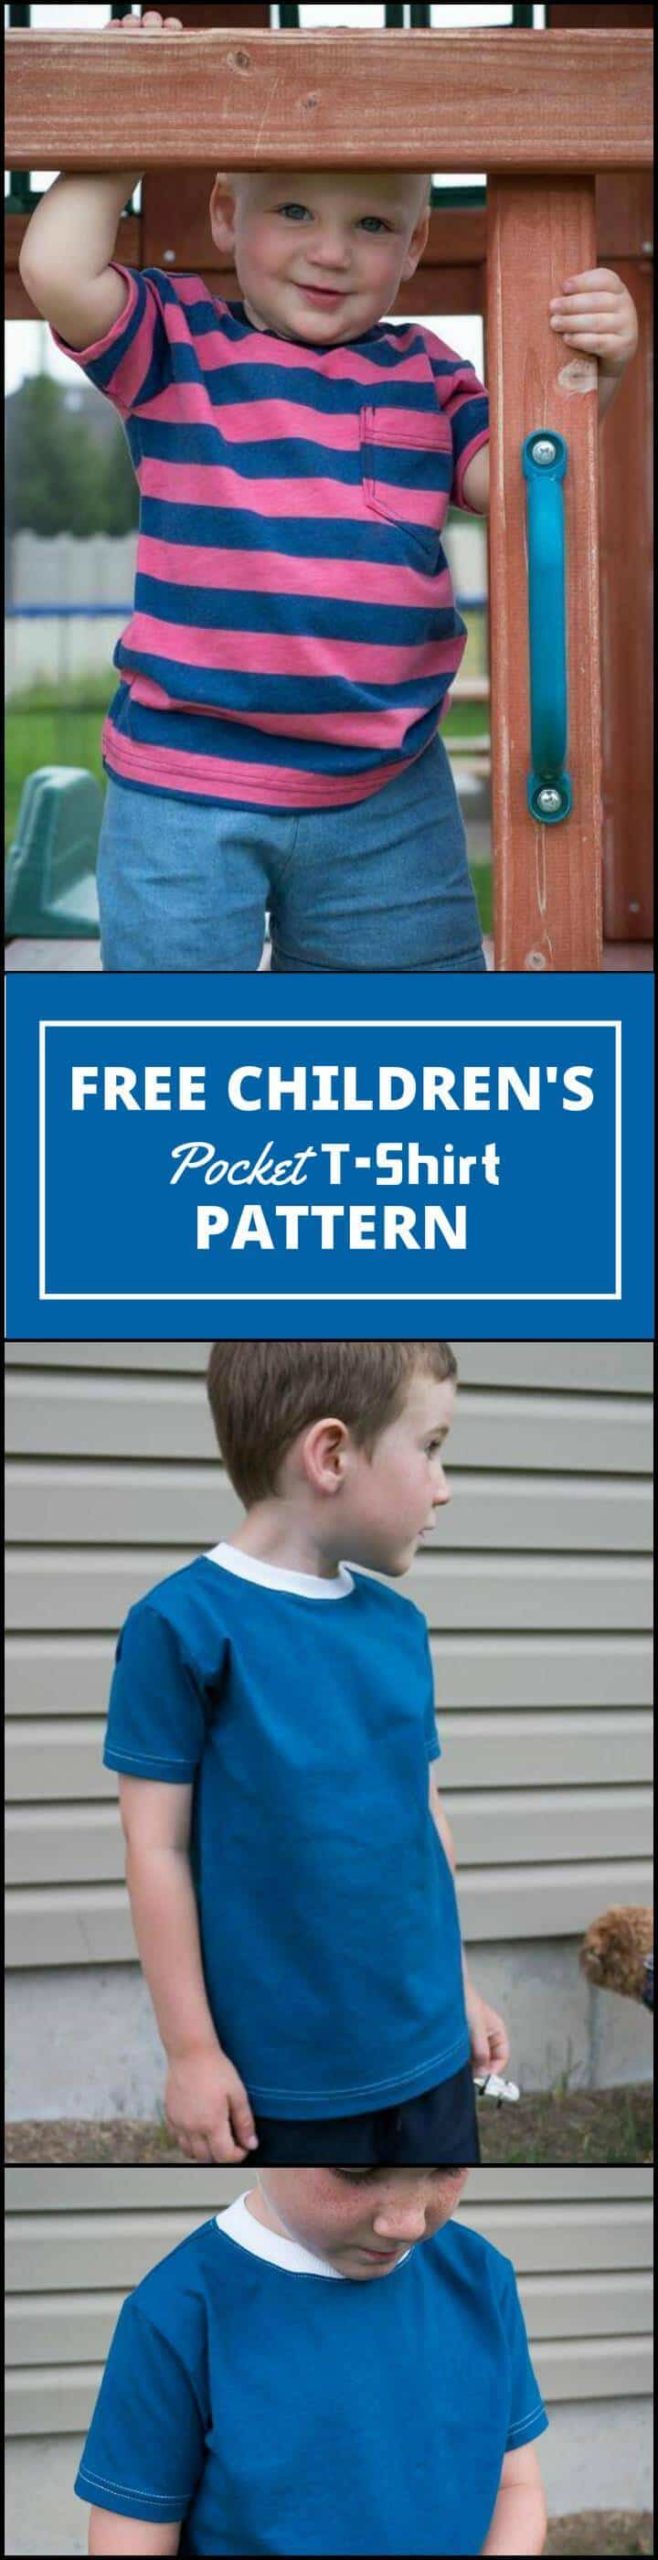 patrón de camiseta de bolsillo para niños gratis